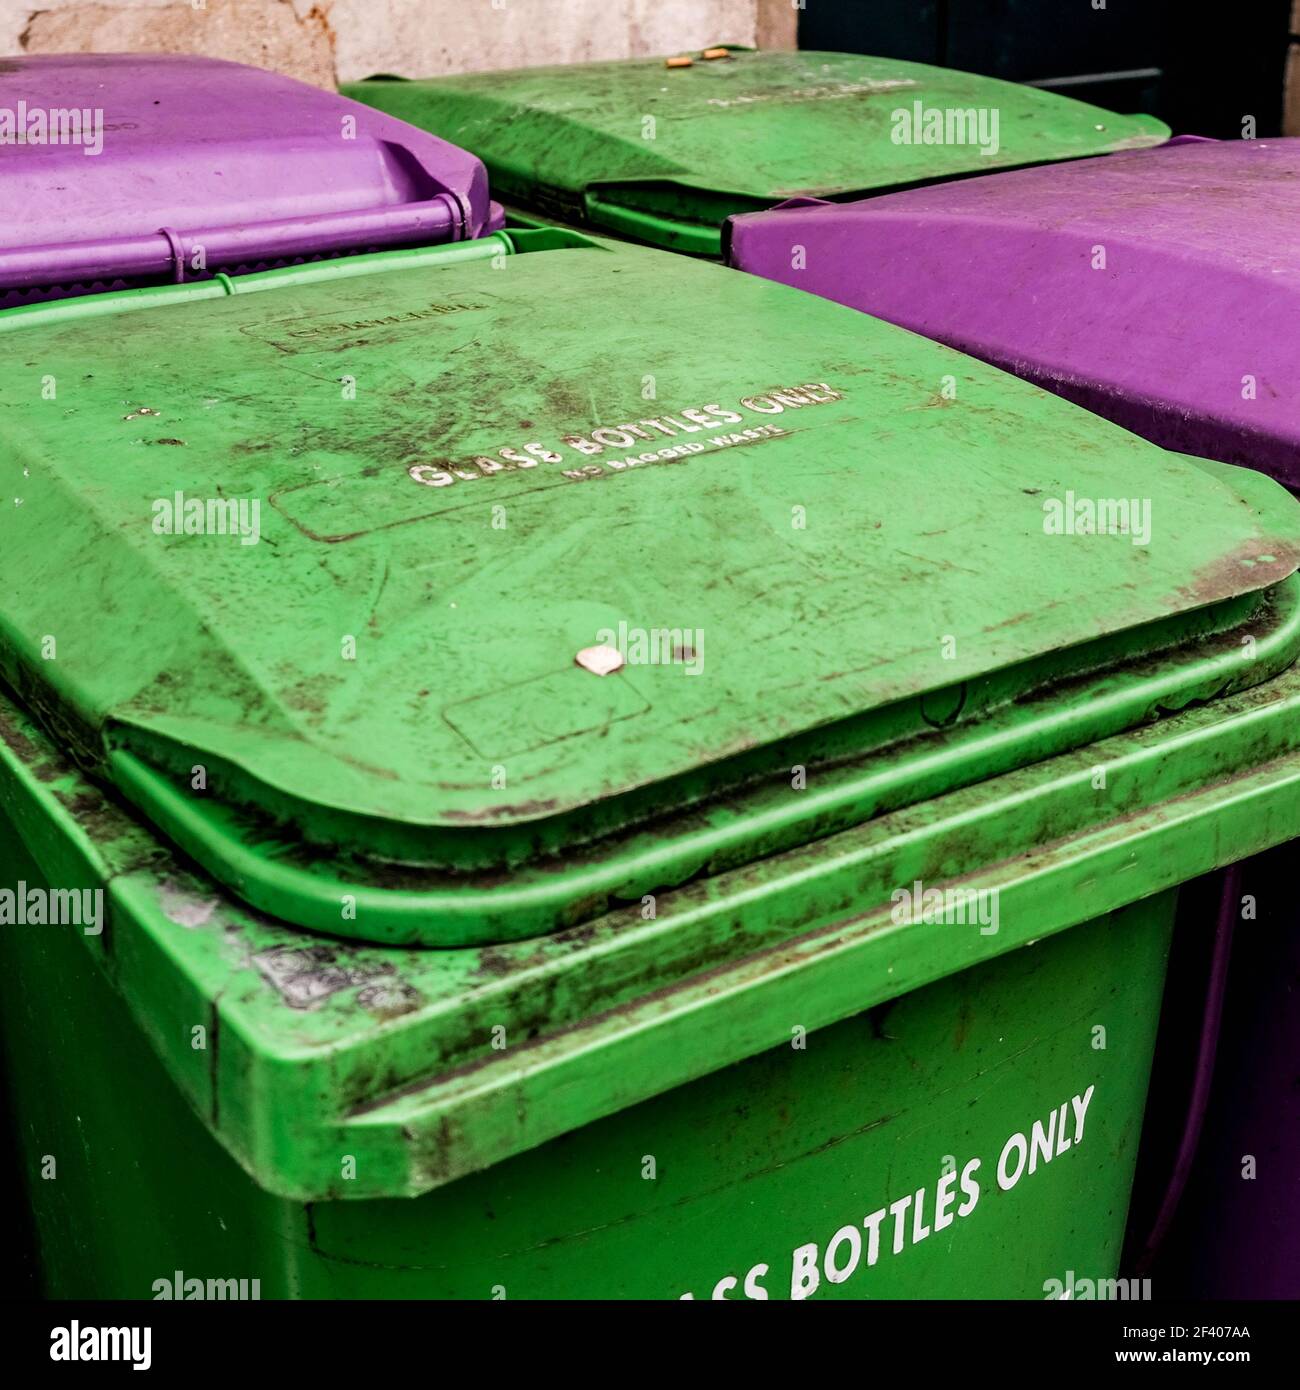 https://c8.alamy.com/comp/2F407AA/london-uk-march-18-2021-green-and-purple-council-rubbish-wheelie-bins-2F407AA.jpg